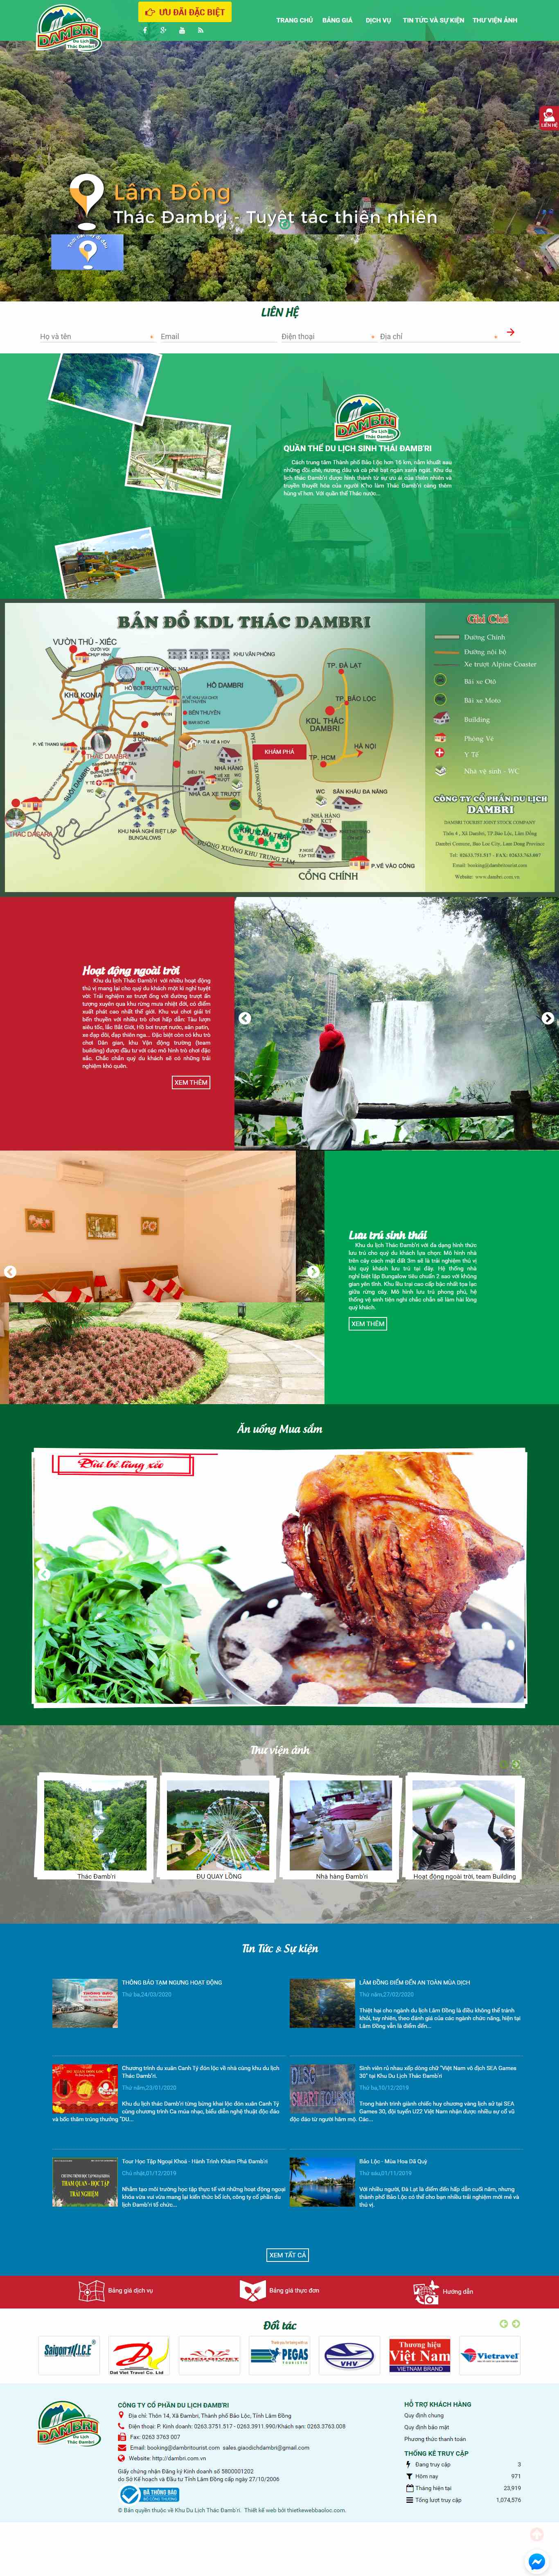 Thiết kế Website khu du lịch - www.dambri.com.vn